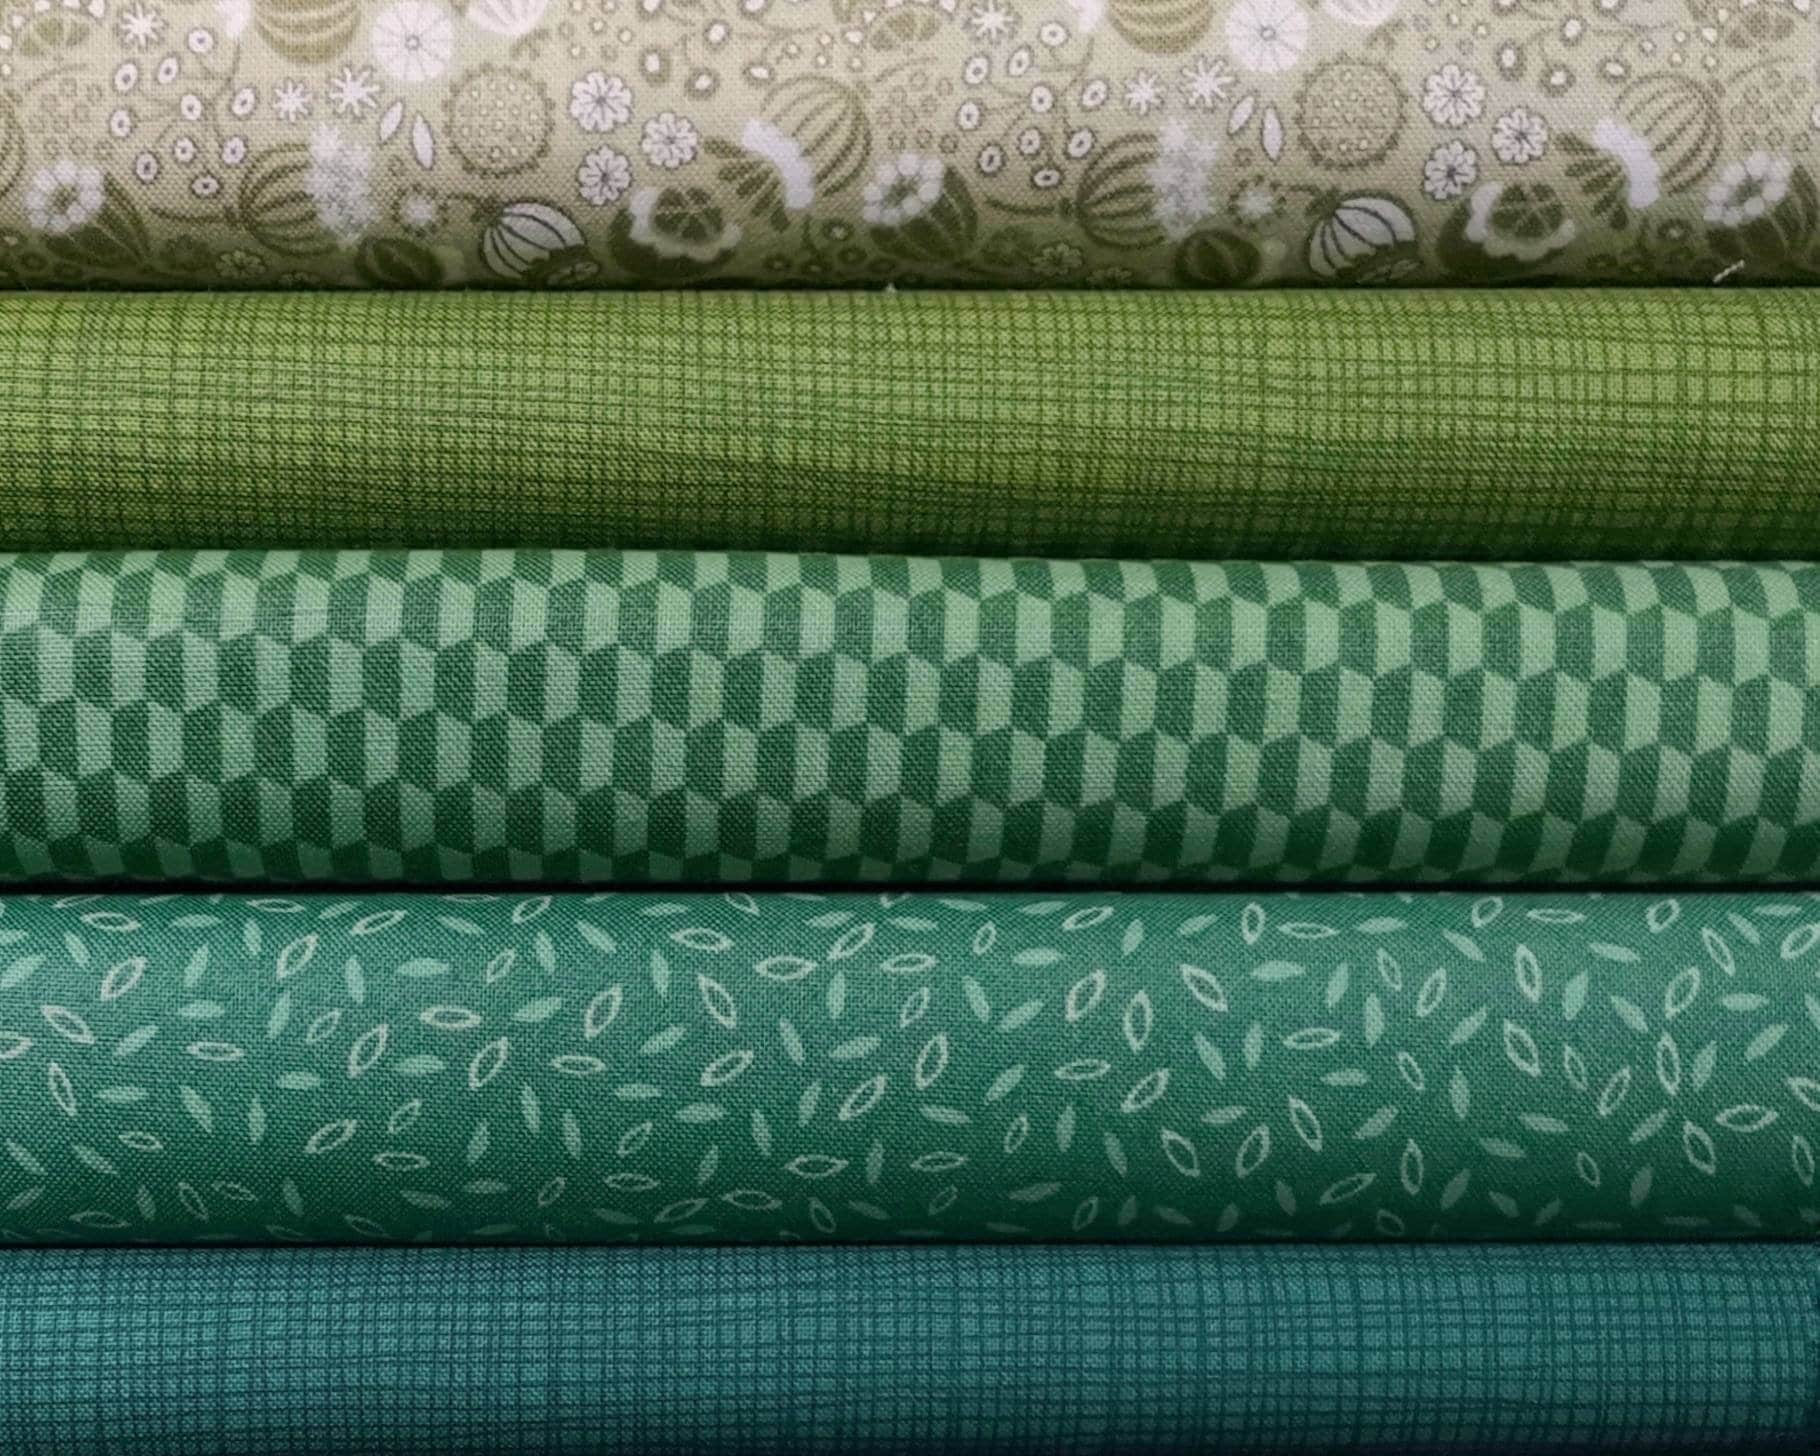 Linen texture Makower 100% cotton quilting fabric 16 fqt bundle RAINBOW!